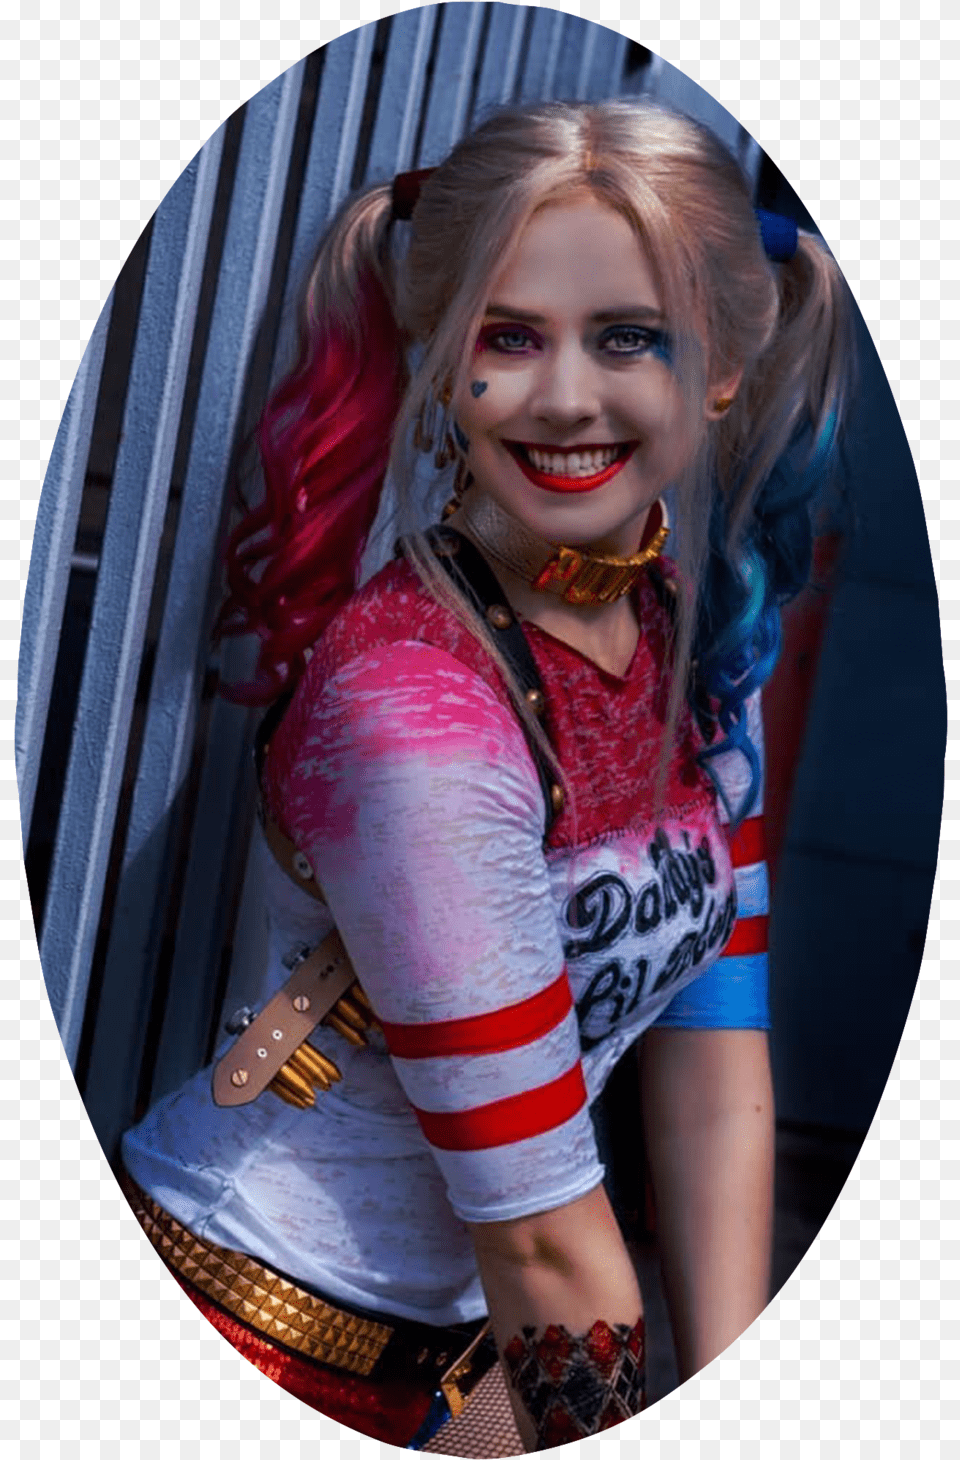 Ppbm Sh Harley Quinn Girl, Adult, Smile, Portrait, Photography Free Transparent Png